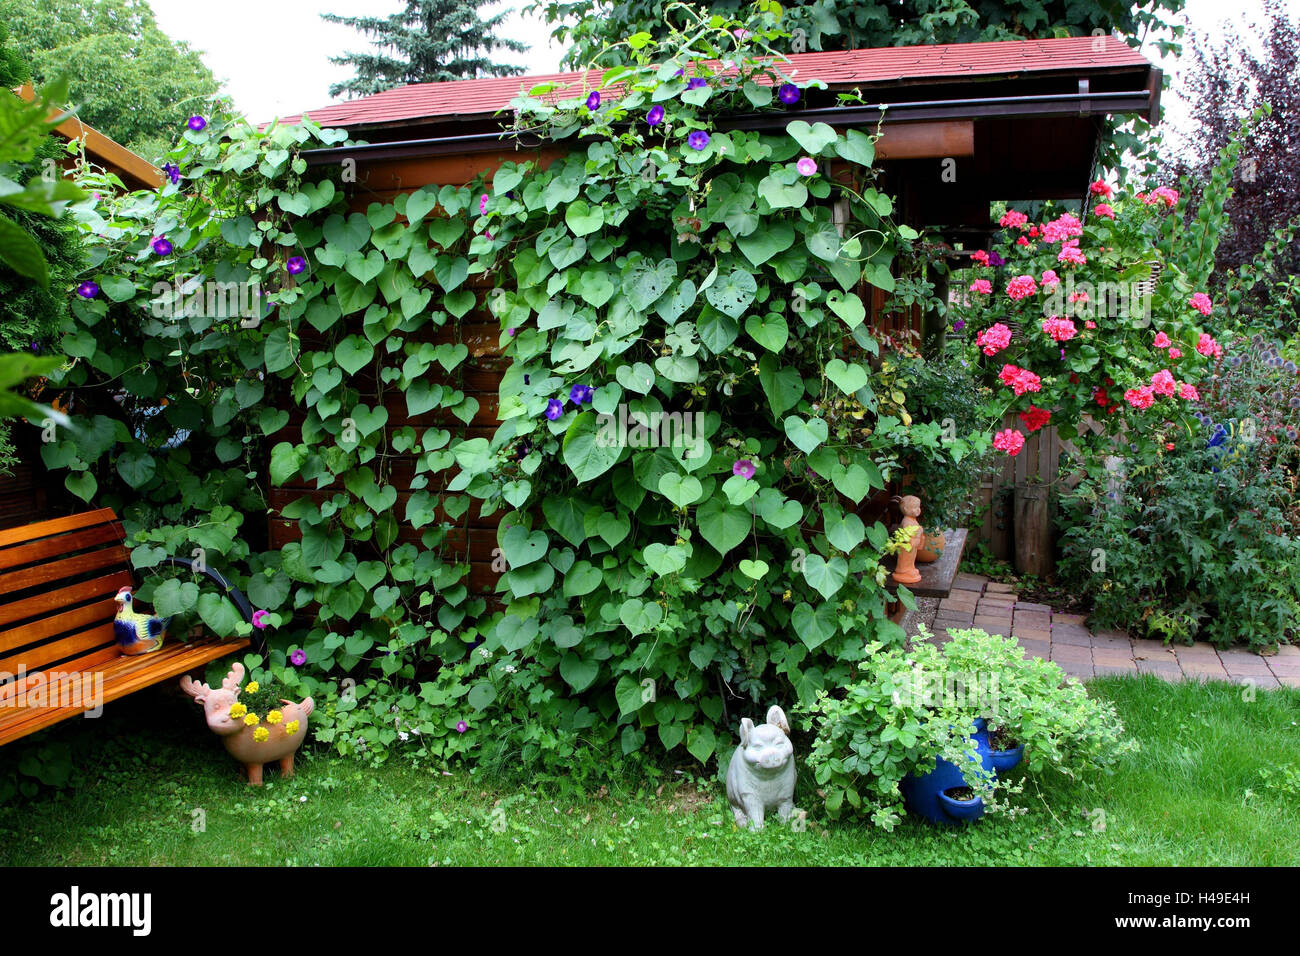 Sommerhaus, Blumen, ranken, abgedeckt Stockfotografie - Alamy